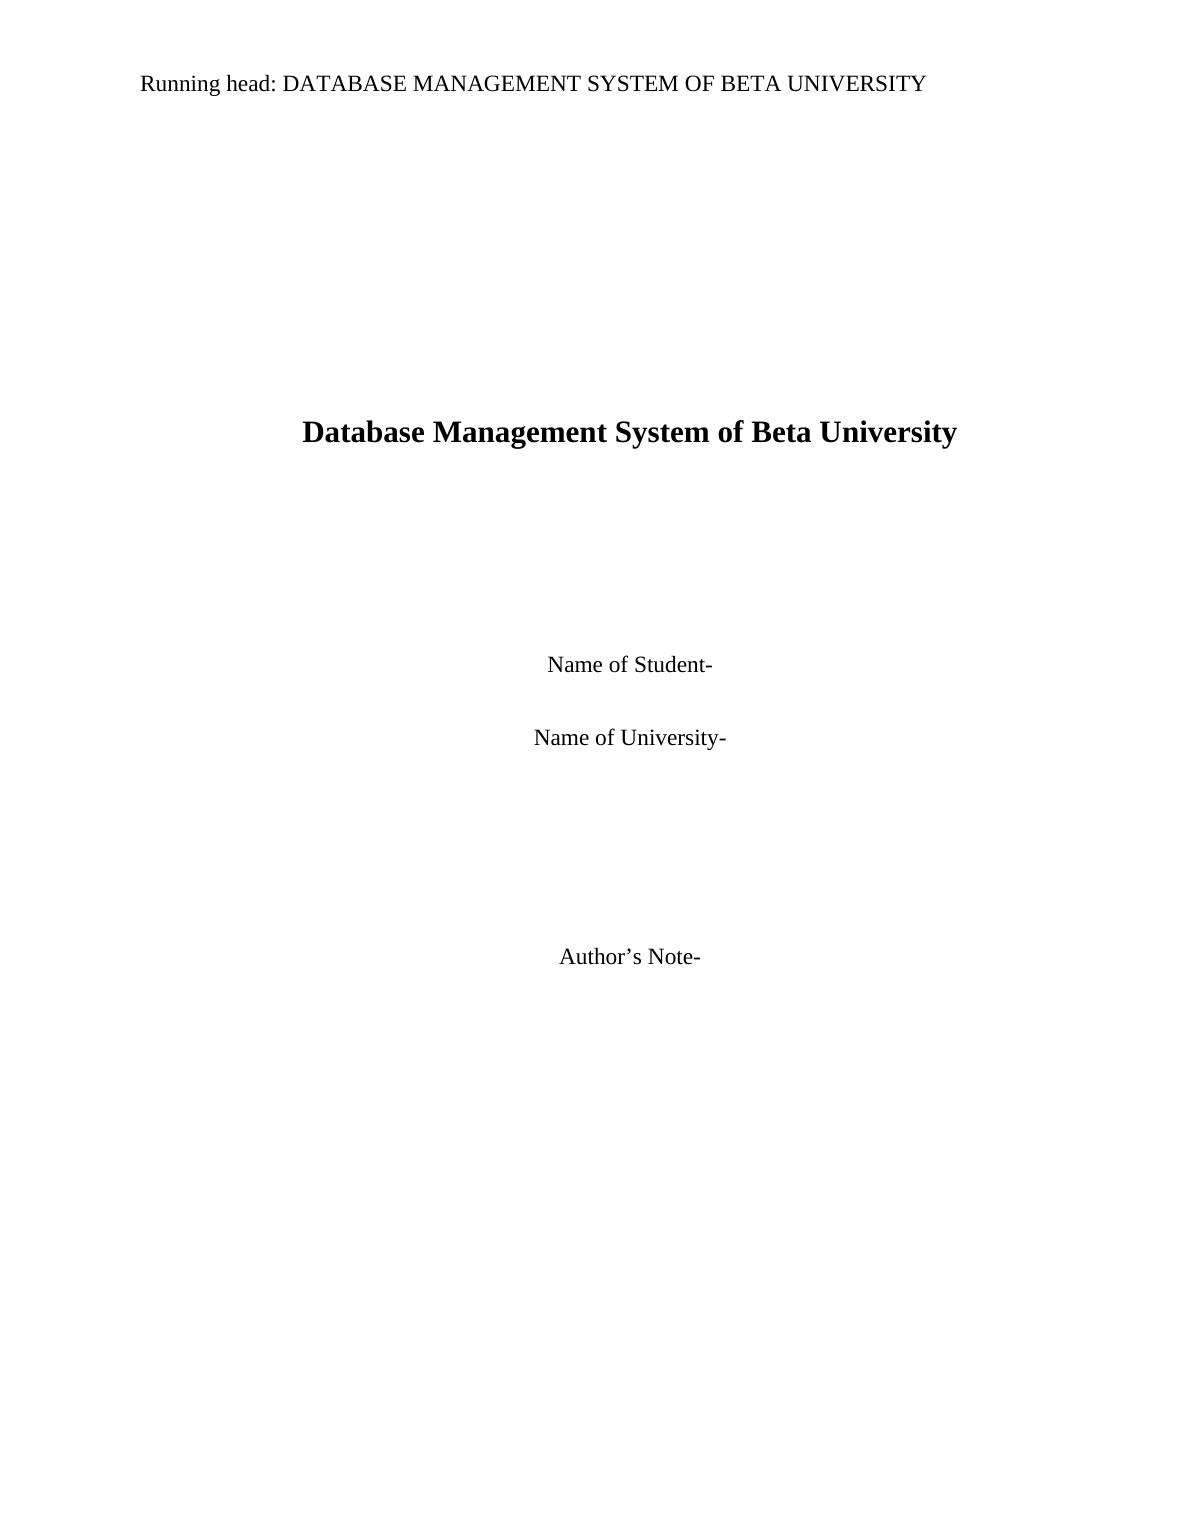 Database Management System of Beta University Assignment_1